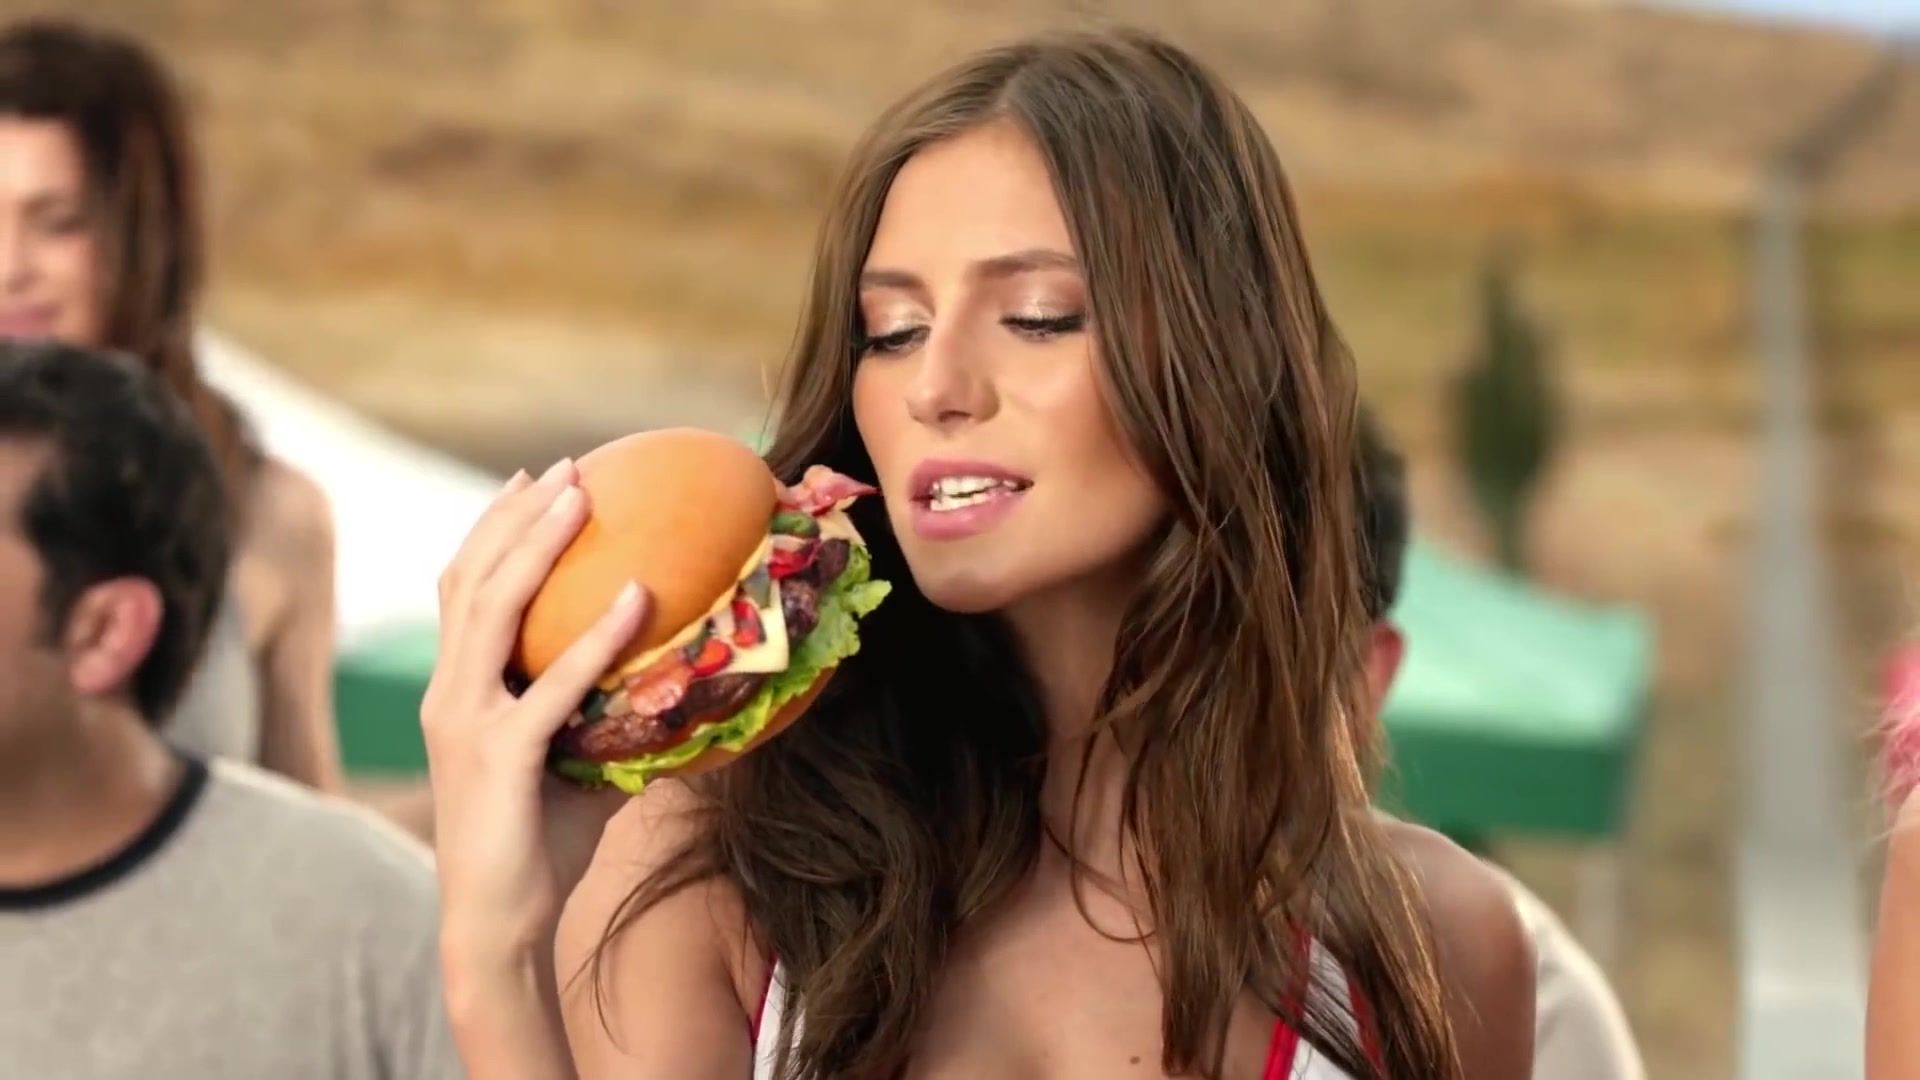 SeekingArrangemen... Sexiest Girls of Fast food Commercials - Charlotte McKinney Kate Upton Emily Rat. Doll